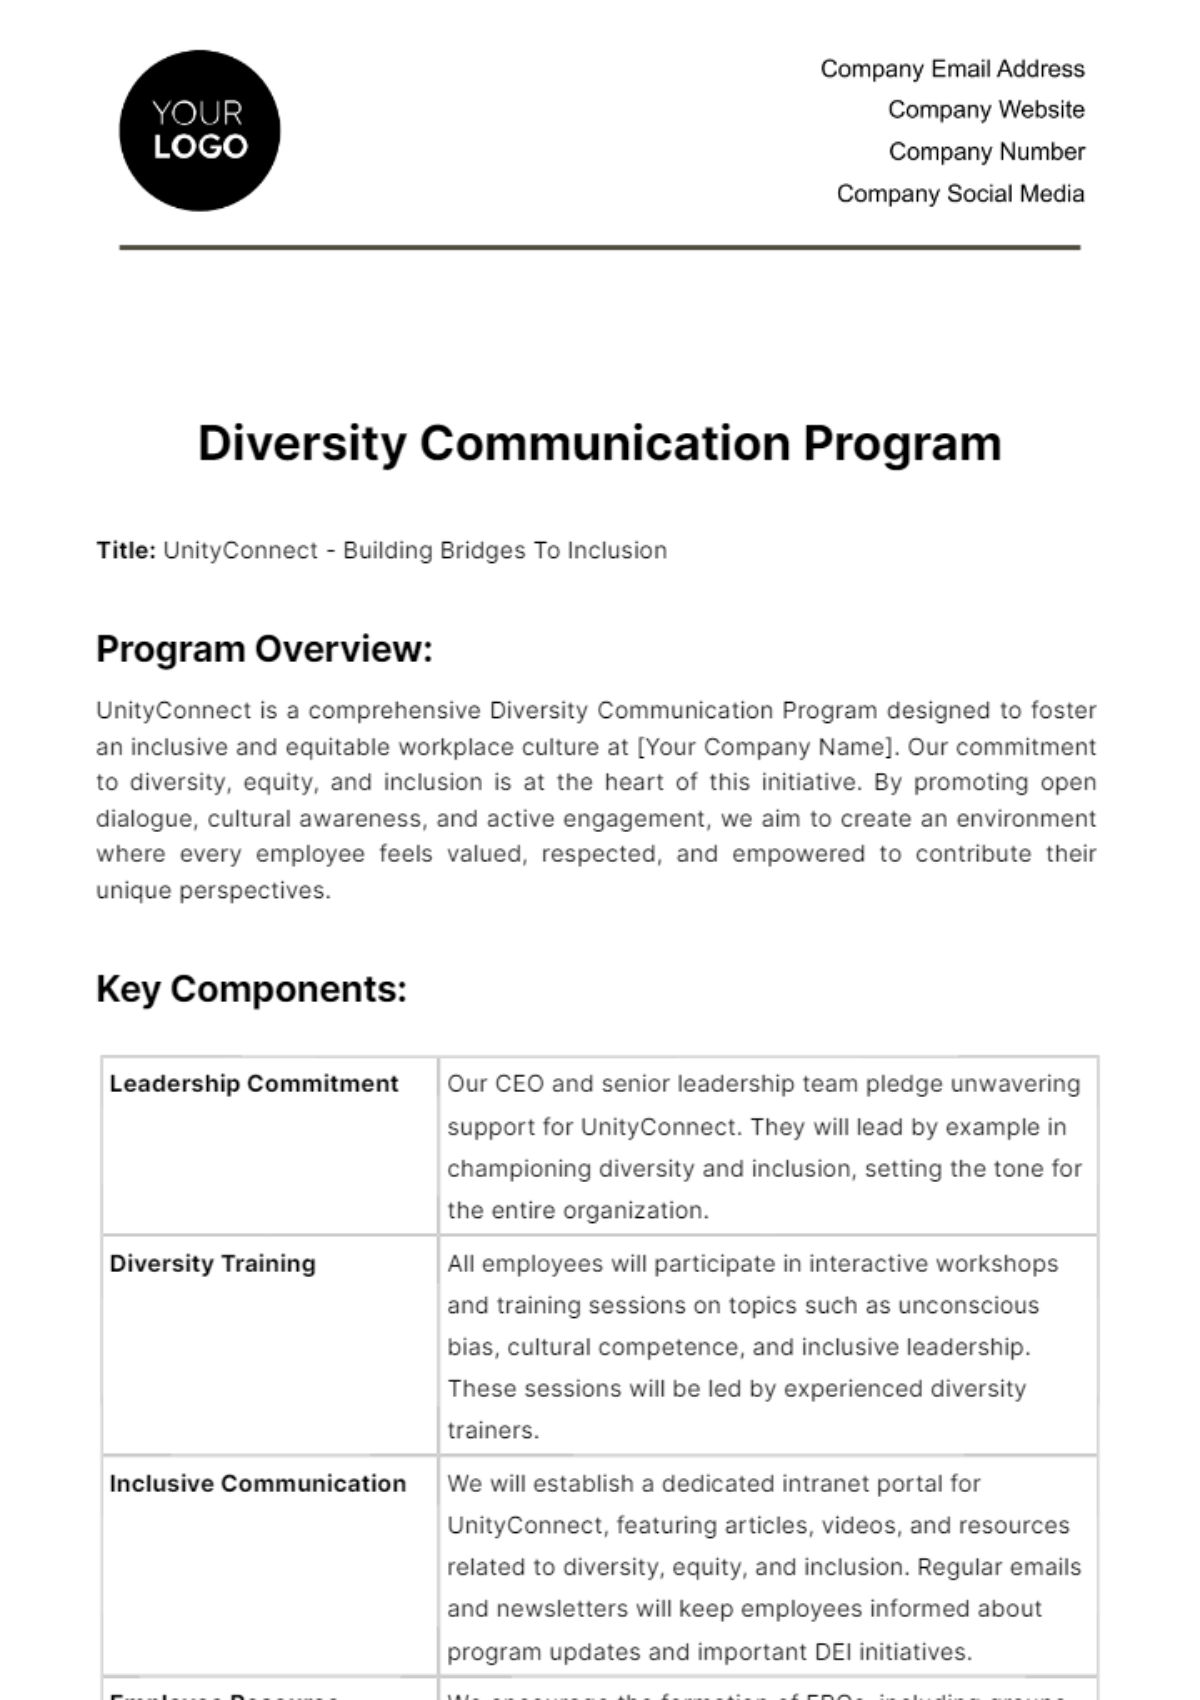 Diversity Communication Program HR Template